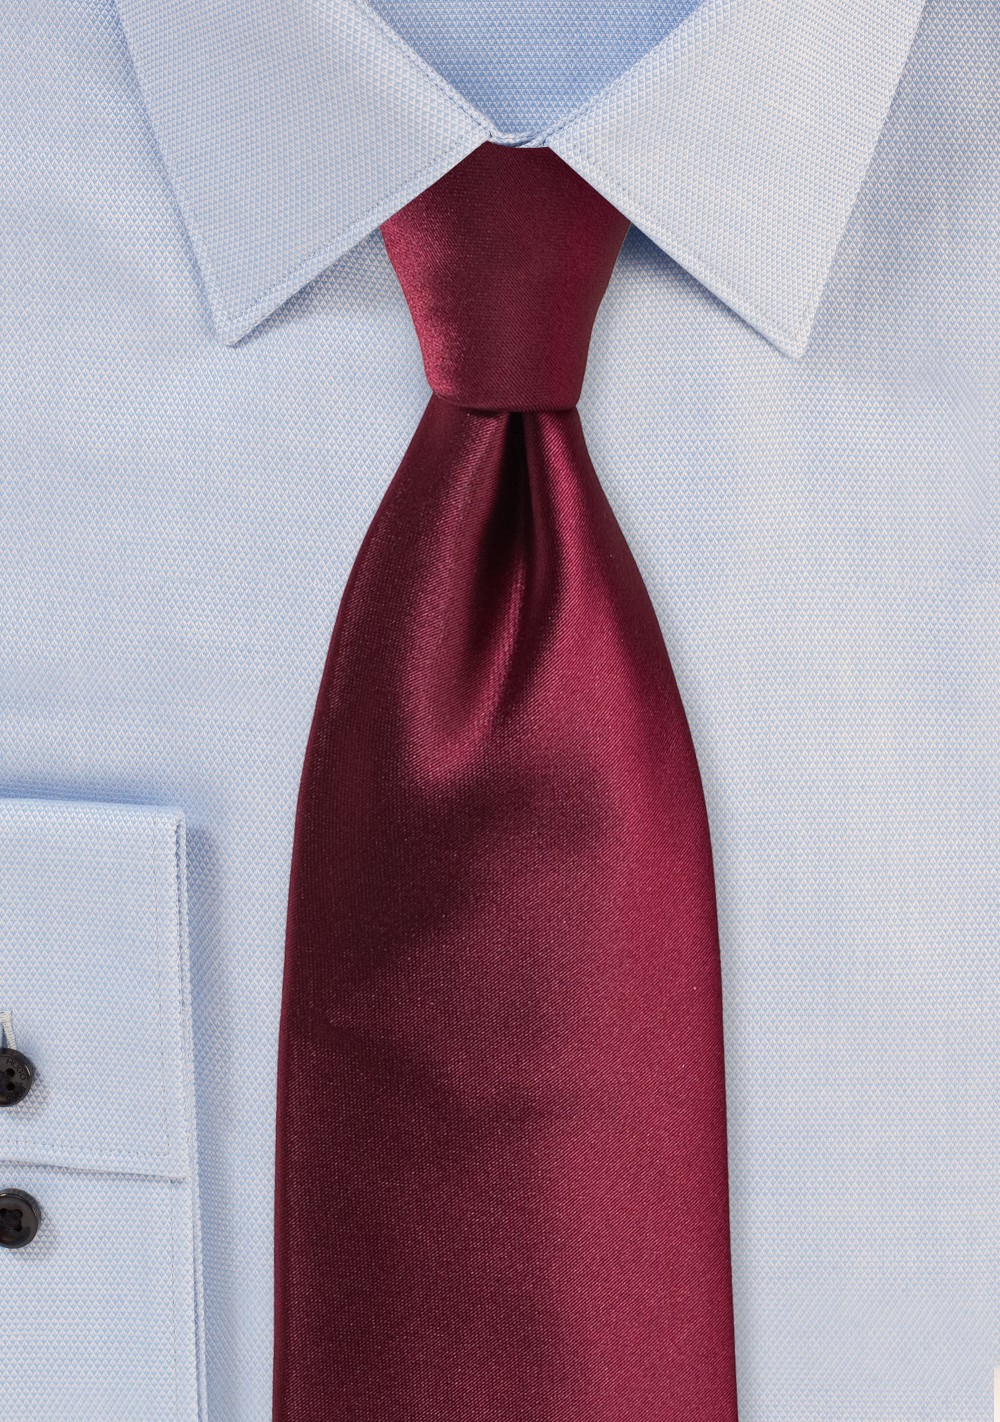 Wine Red Colored Necktie